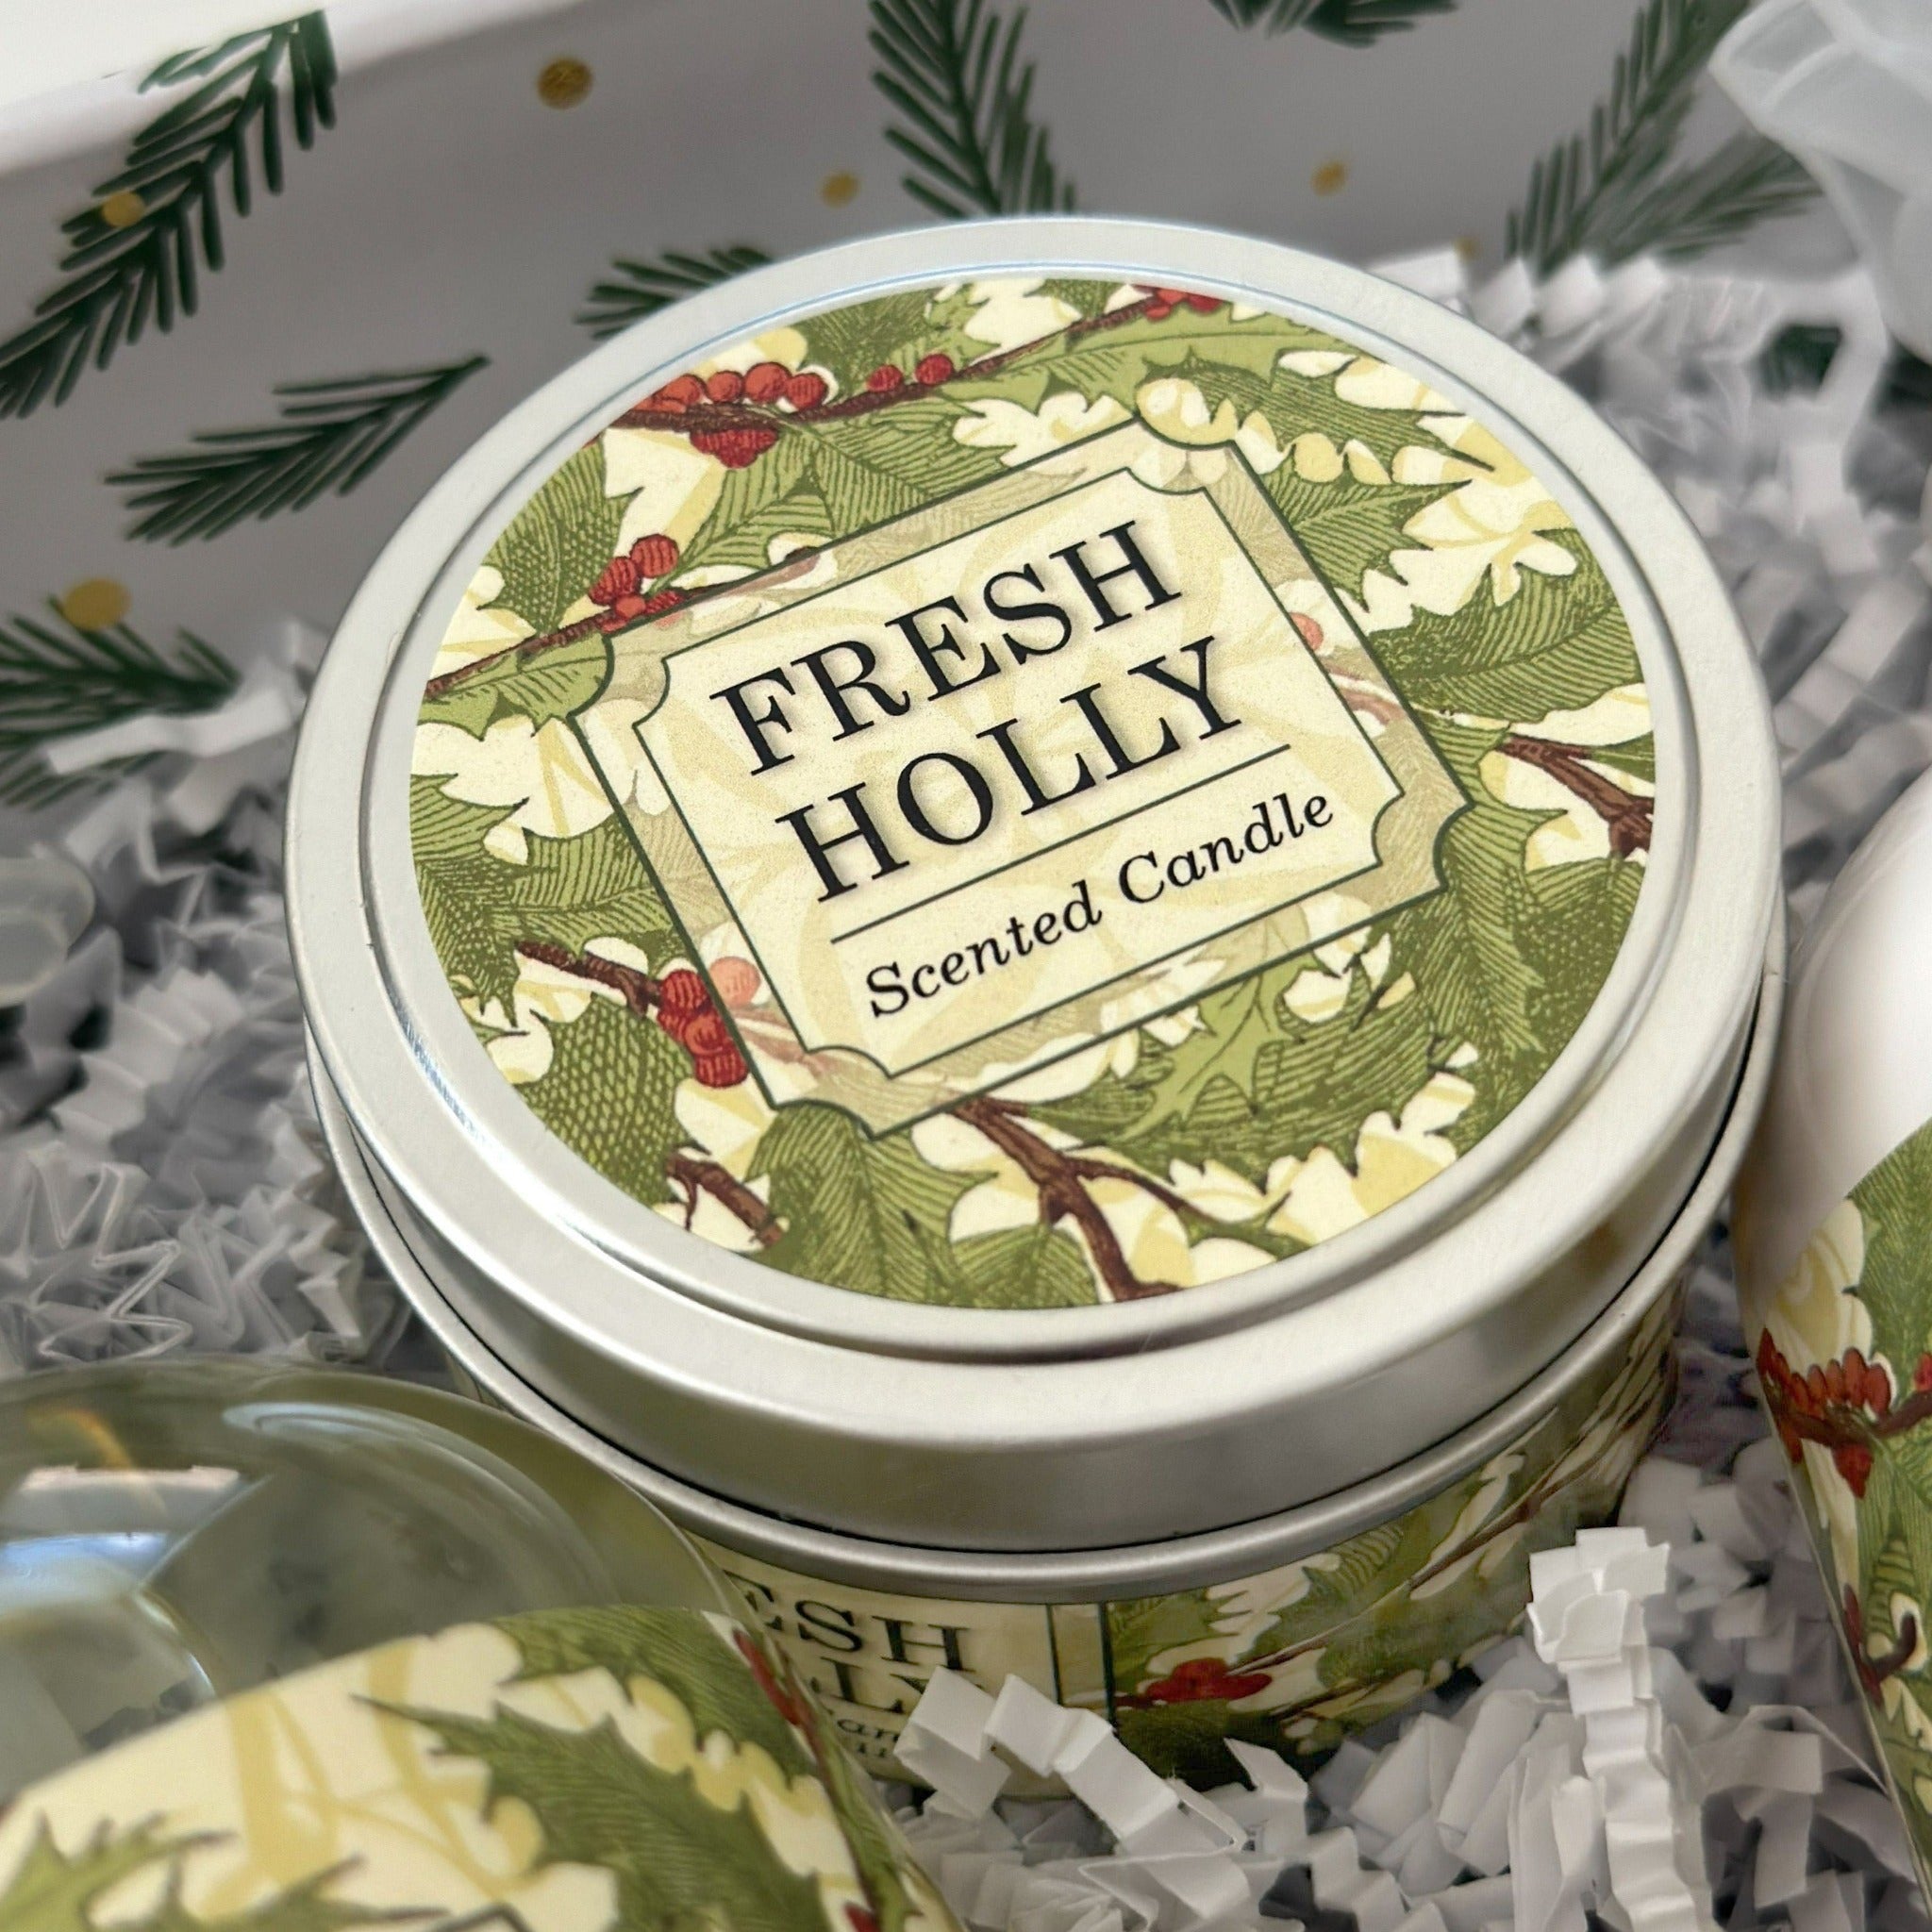 Greenwich Bay Trading Company FRESH HOLLY Holiday Gift Set